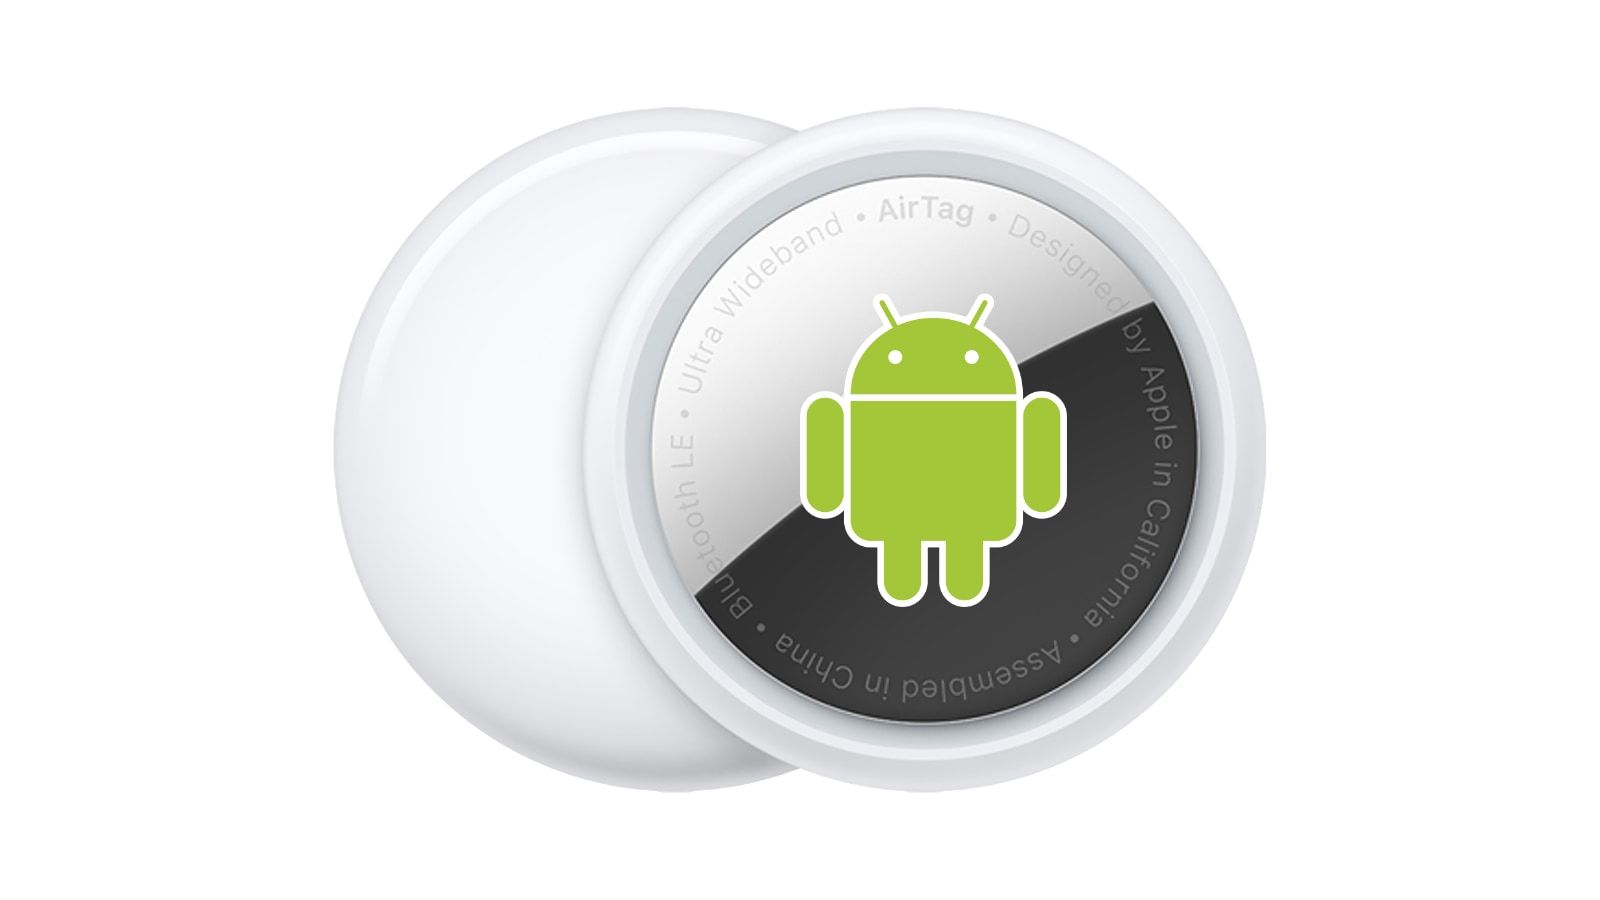 Android détecte enfin les AirTags comme iOS - iPhone Soft